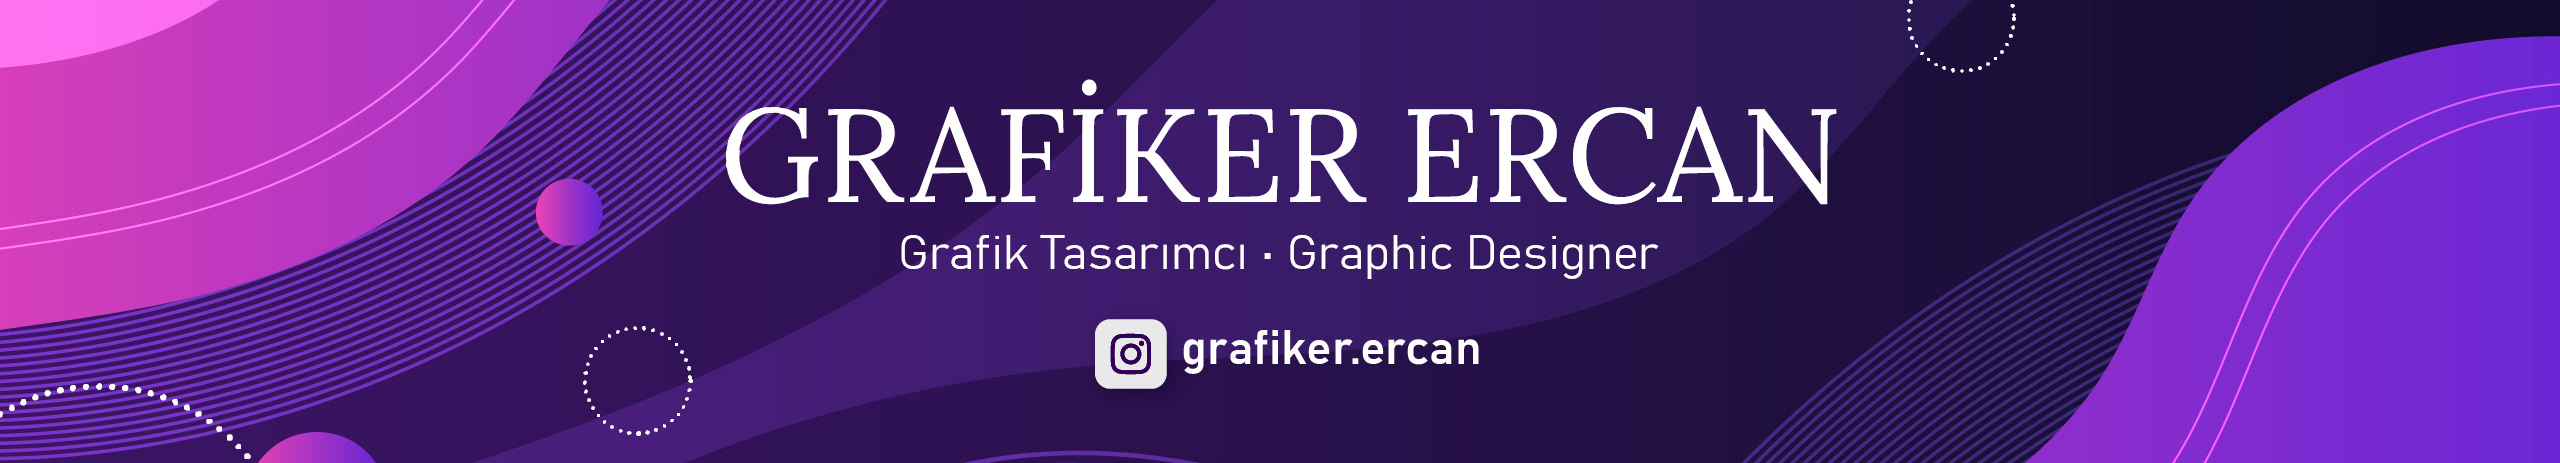 Grafiker Ercan's profile banner